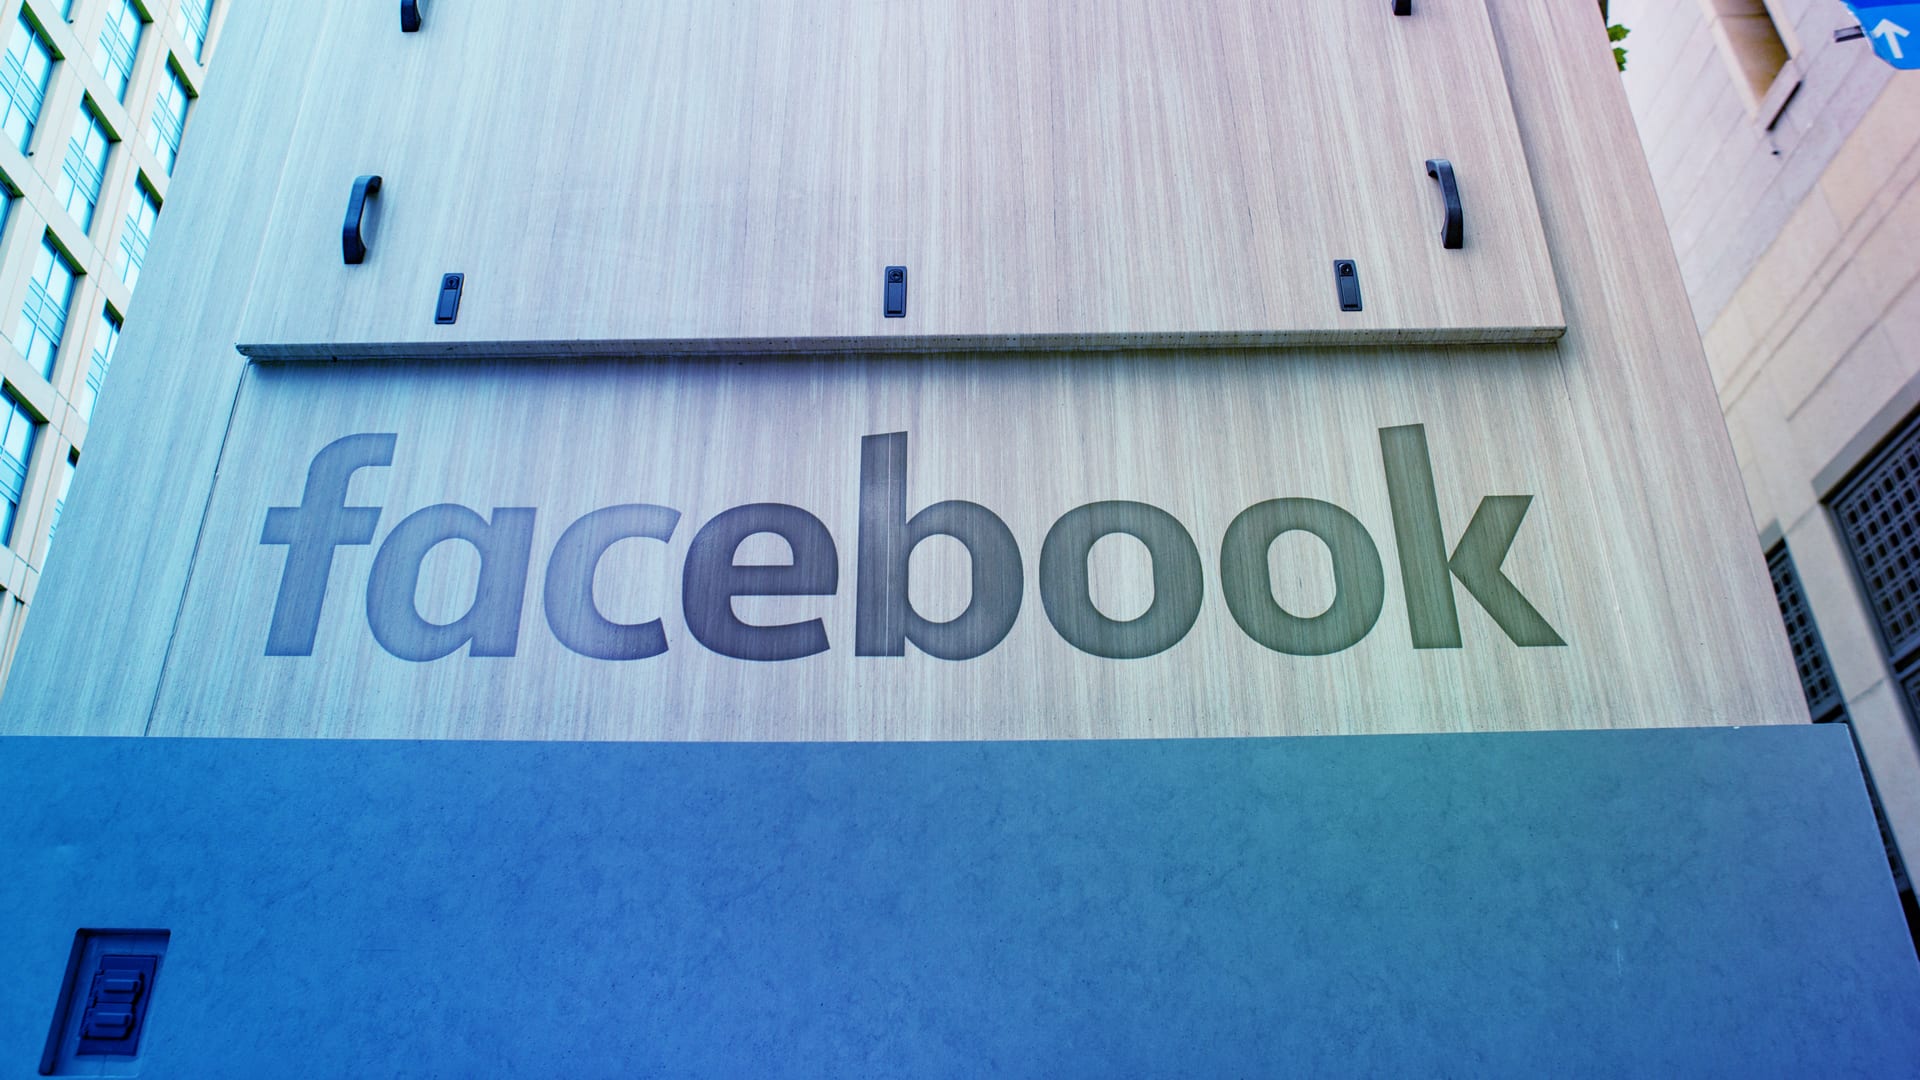 Analyst warns Facebook investors: “systemic mismanagement” poses big risks